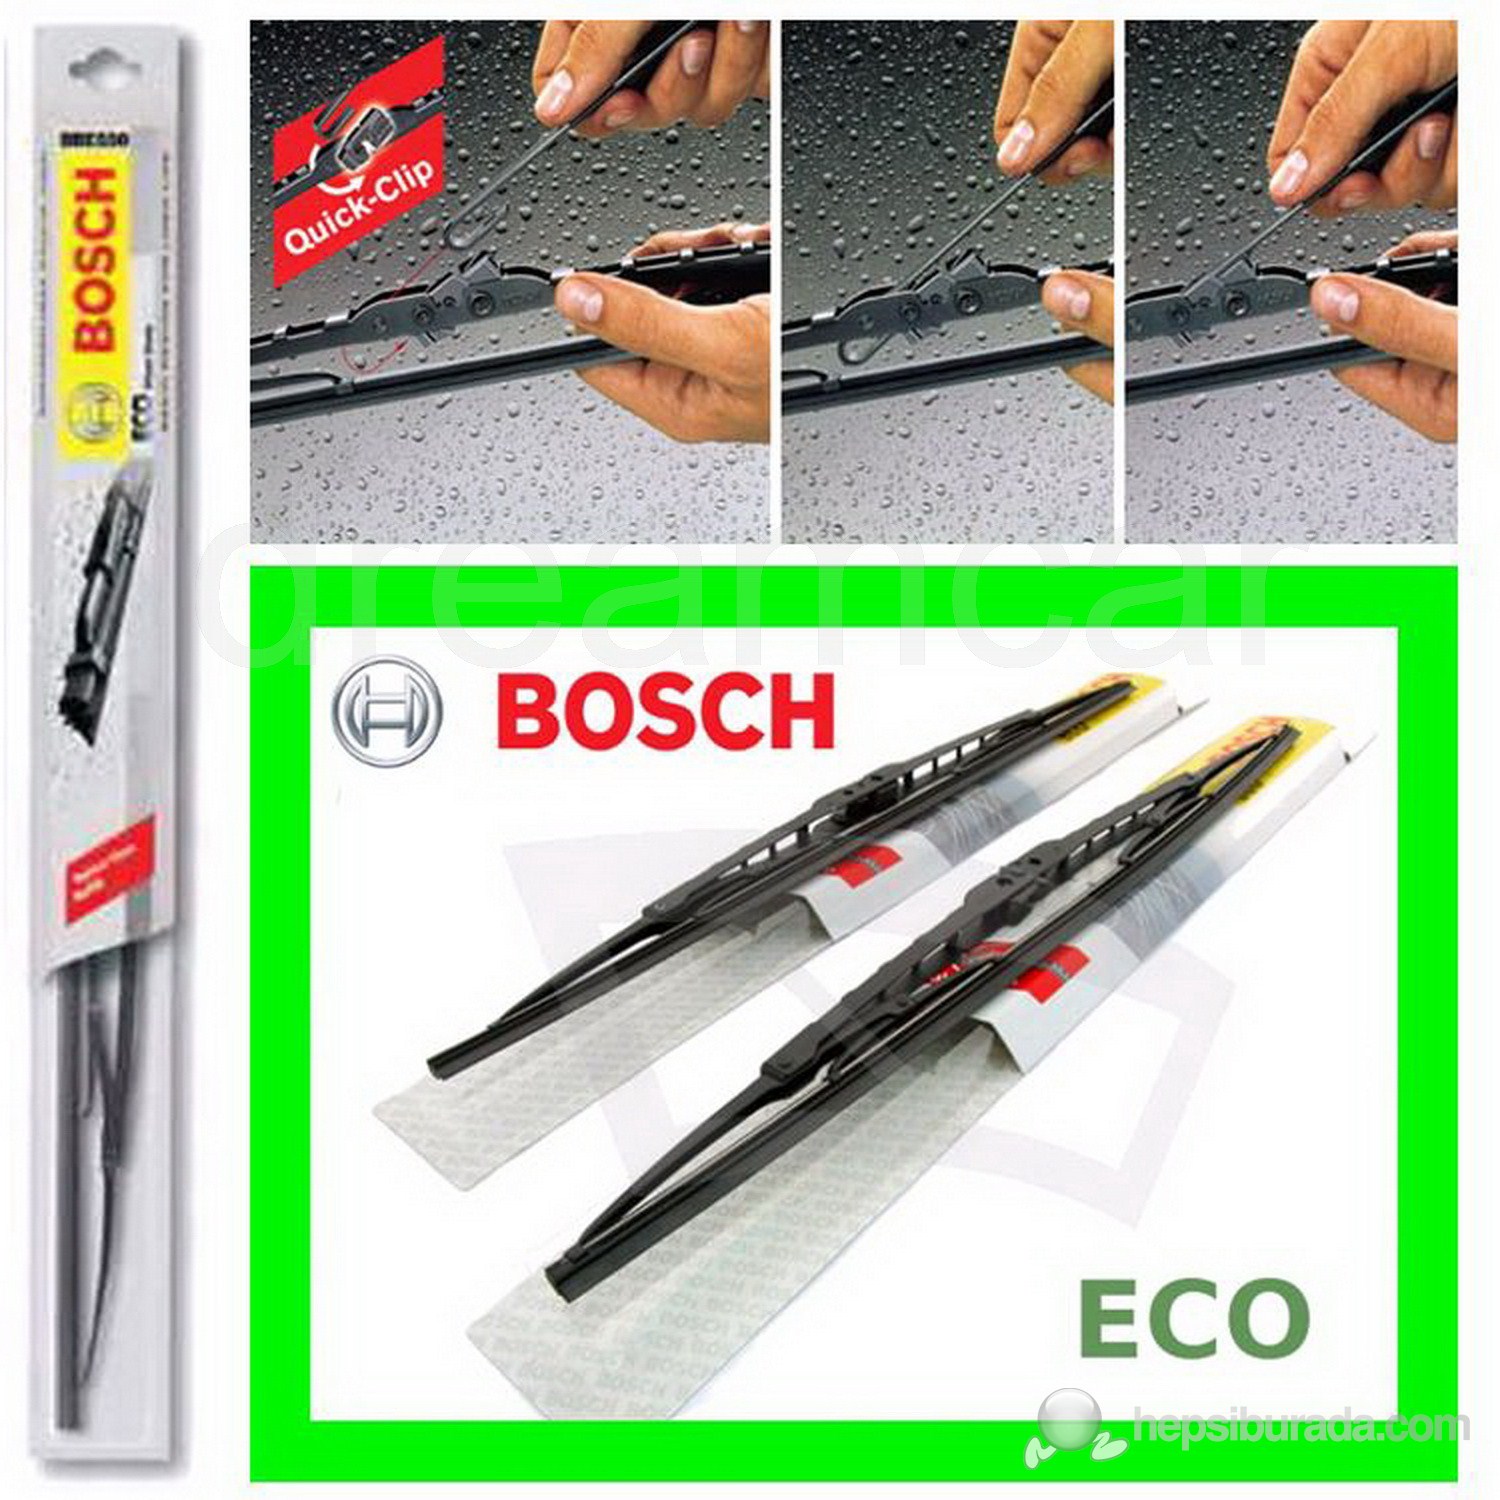 Bosch Eco Universal Quick-Clip Telli Grafitili Silecek 55 Cm. 1 Adet 3397004672